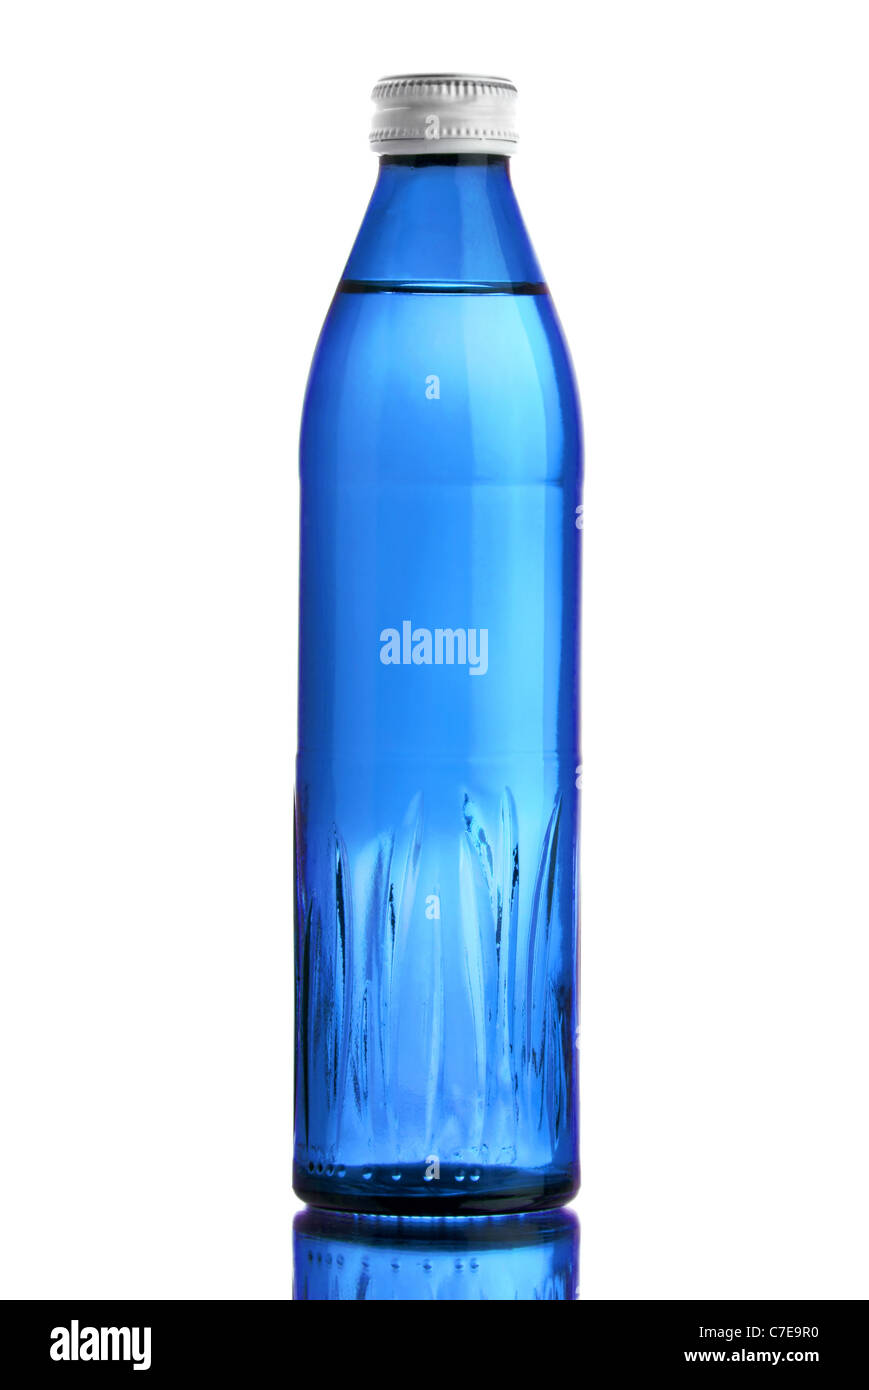 https://c8.alamy.com/comp/C7E9R0/glass-small-bottle-closeup-isolated-on-white-C7E9R0.jpg